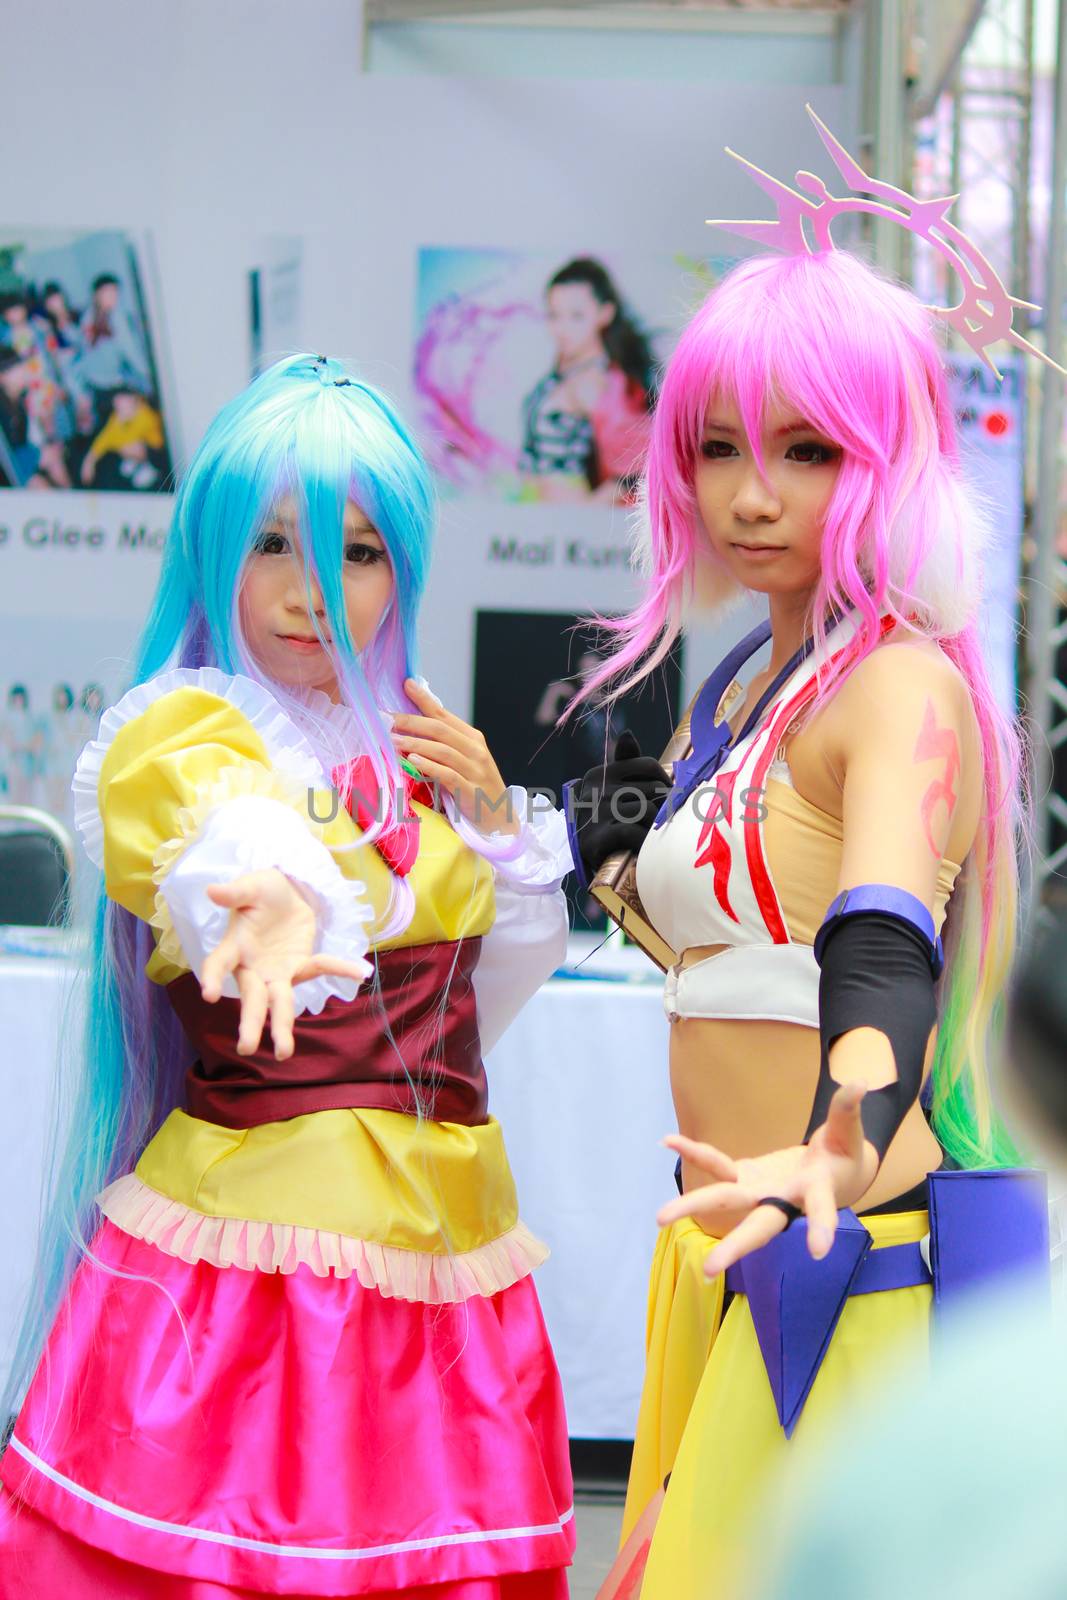 Bangkok - Aug 31: An unidentified Japanese anime cosplay Shiro and Jibril pose  on August 31, 2014 at Central World, Bangkok, Thailand.